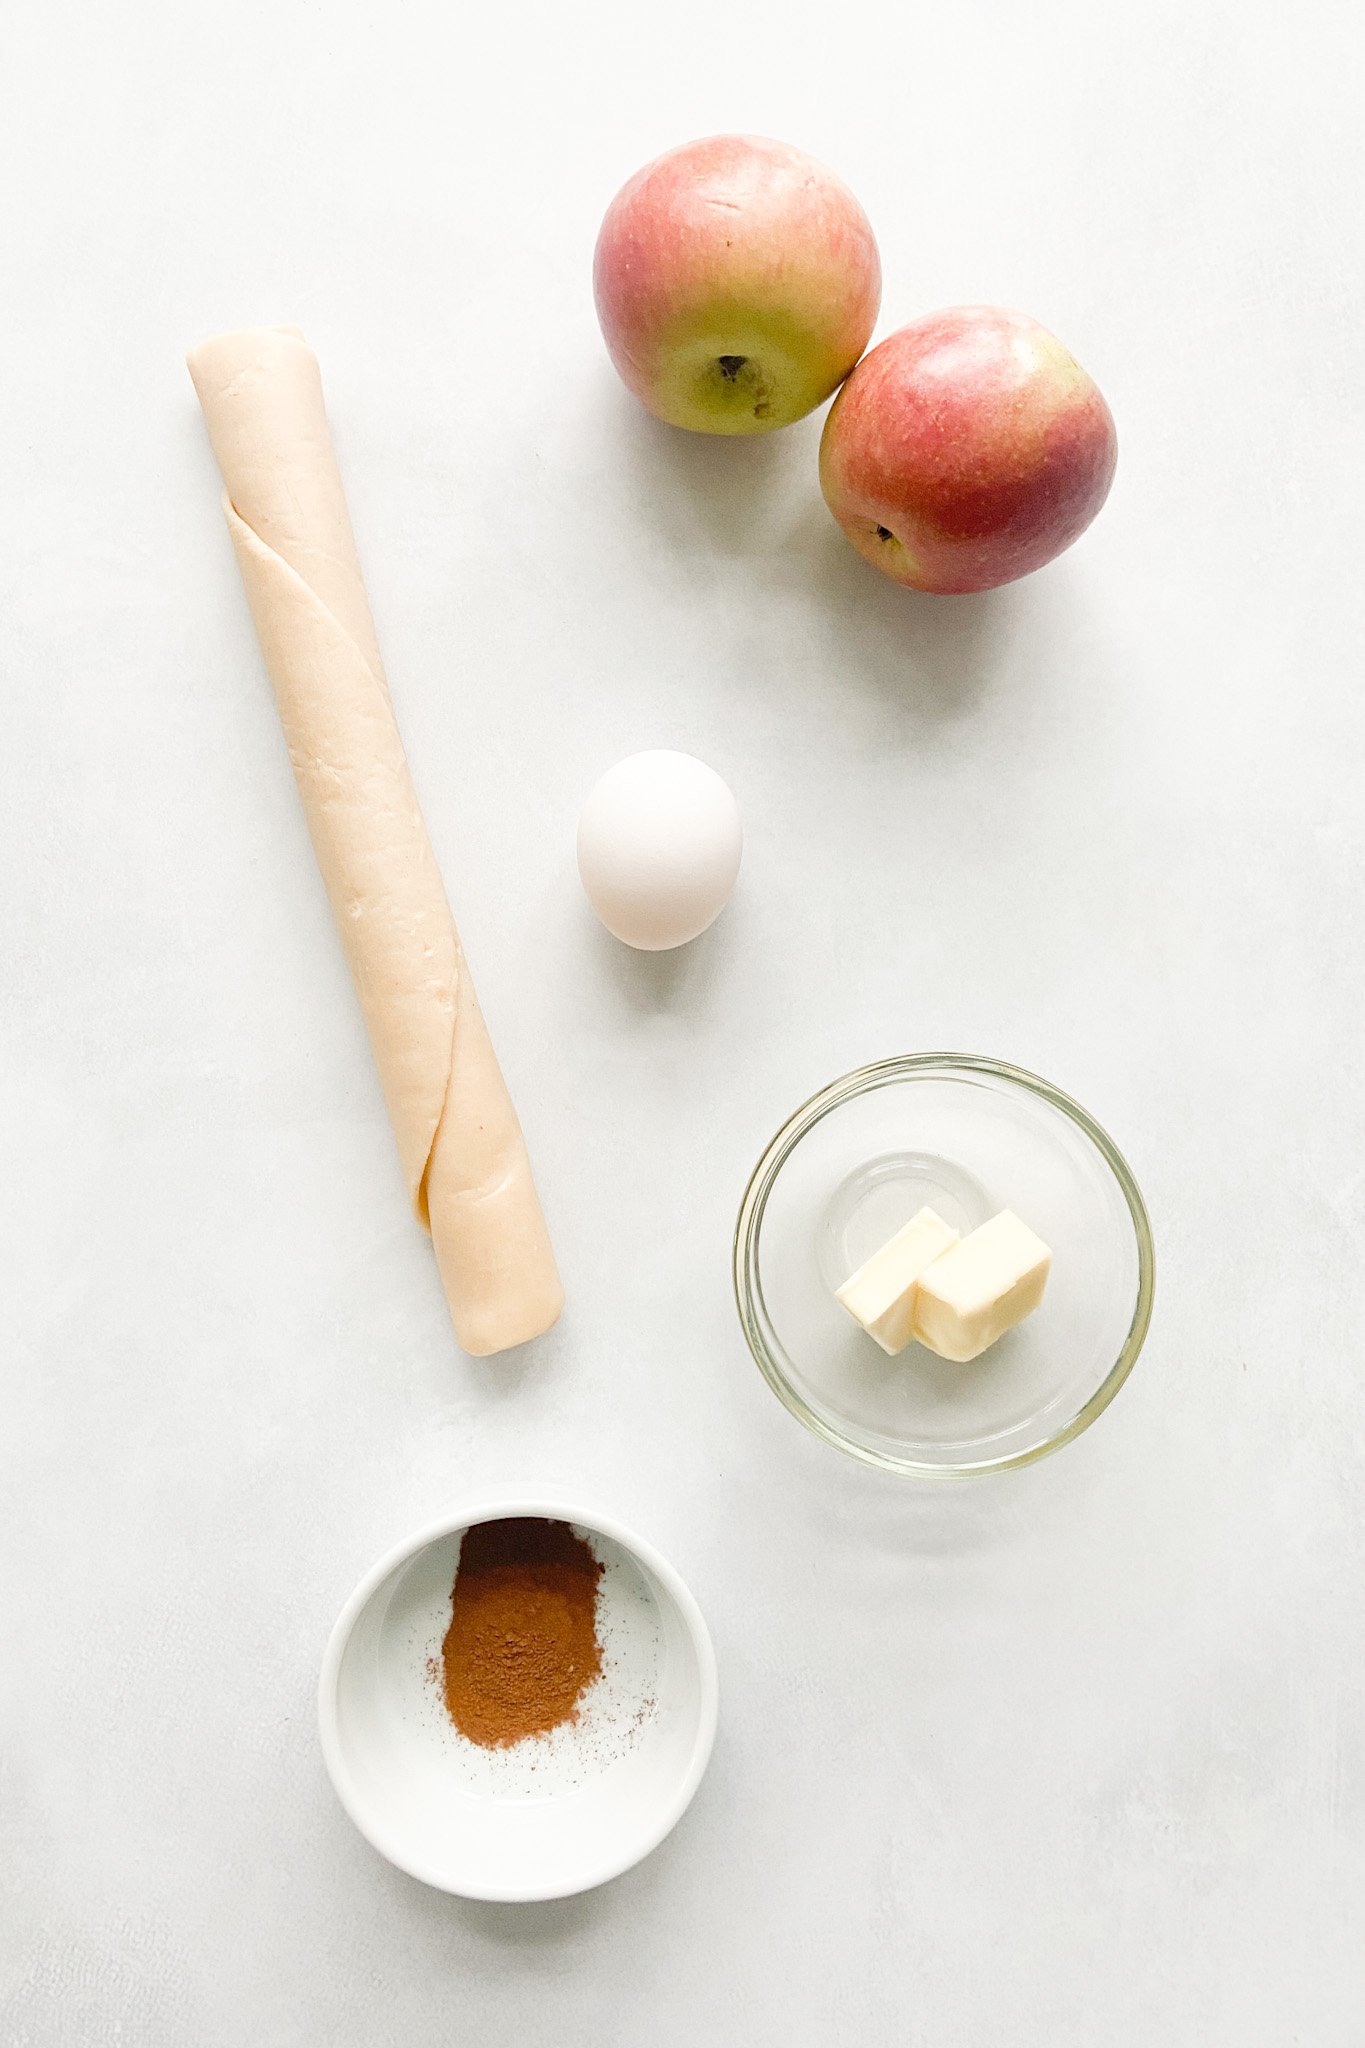 Ingredients to make apple pie empanadas. See recipe card for full ingredient details.